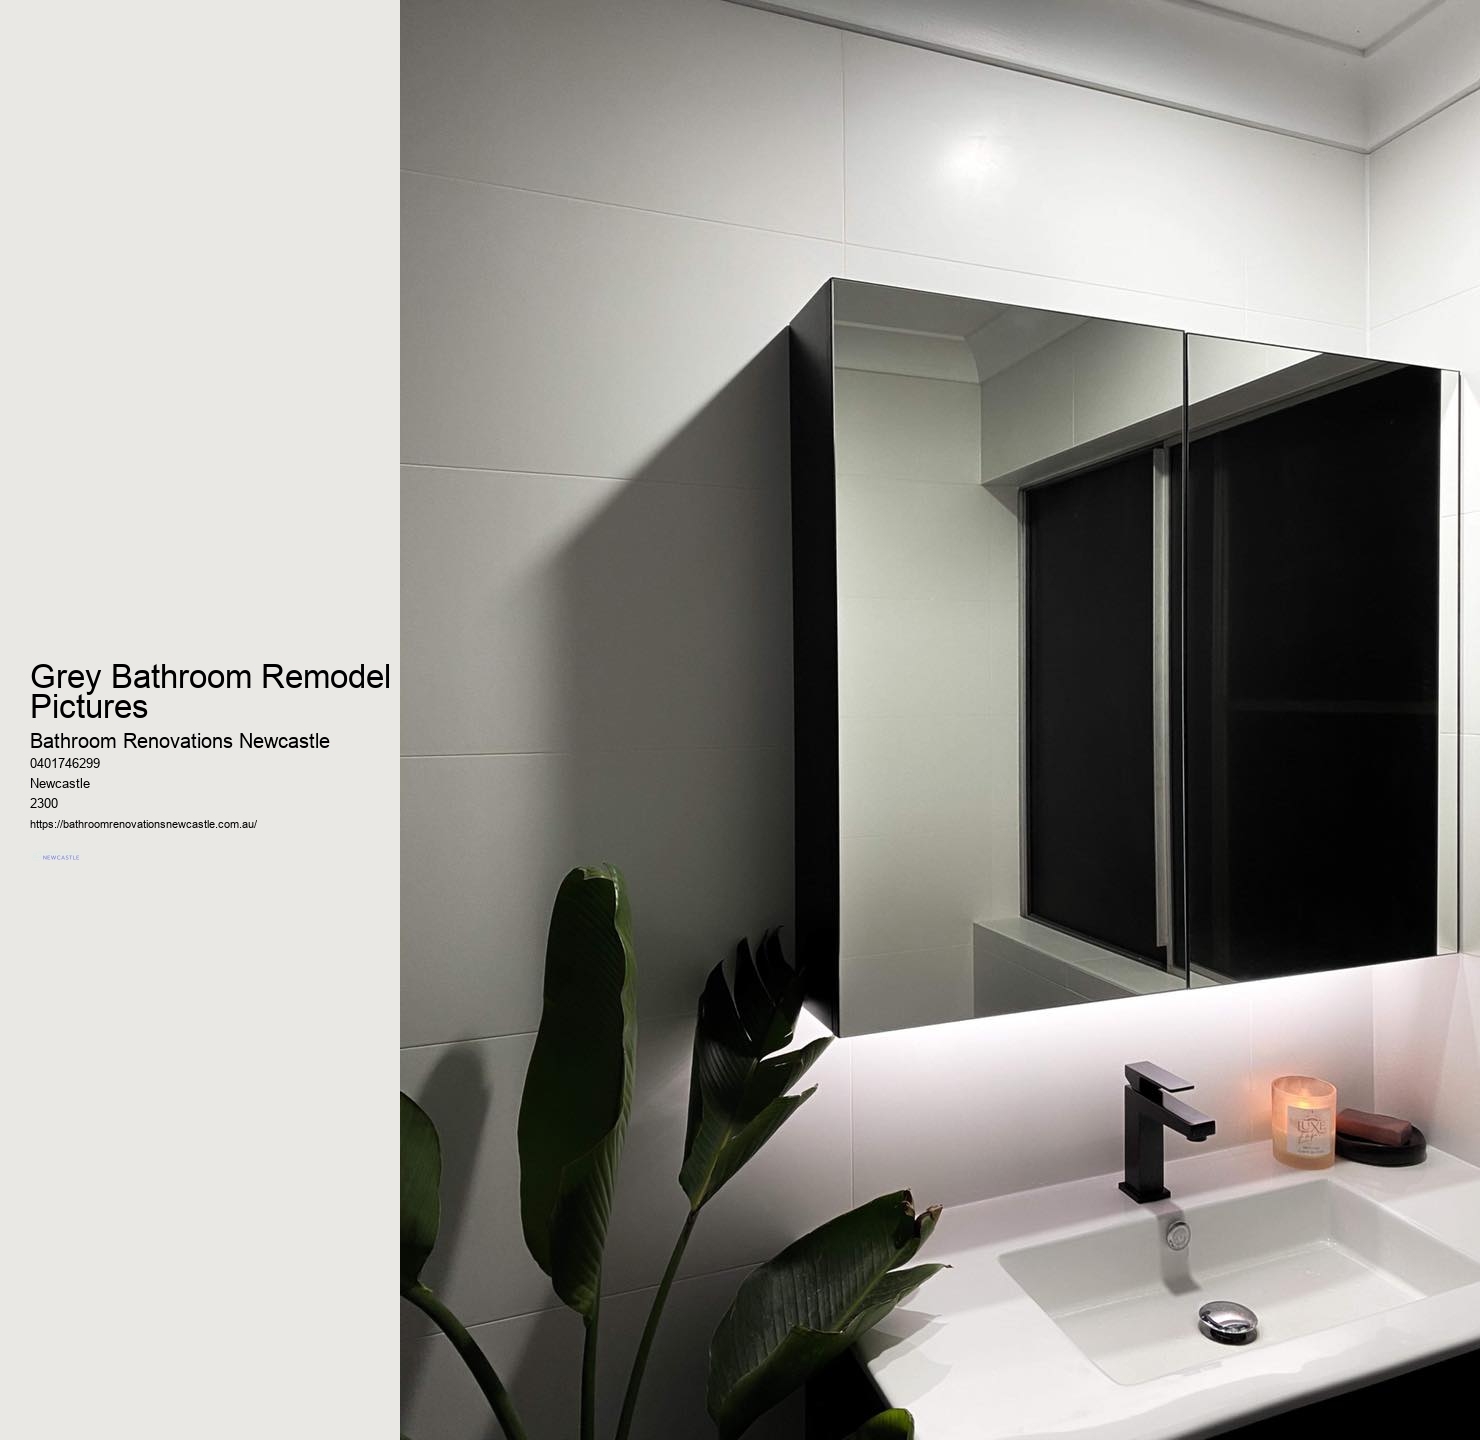 Grey Bathroom Remodel Pictures